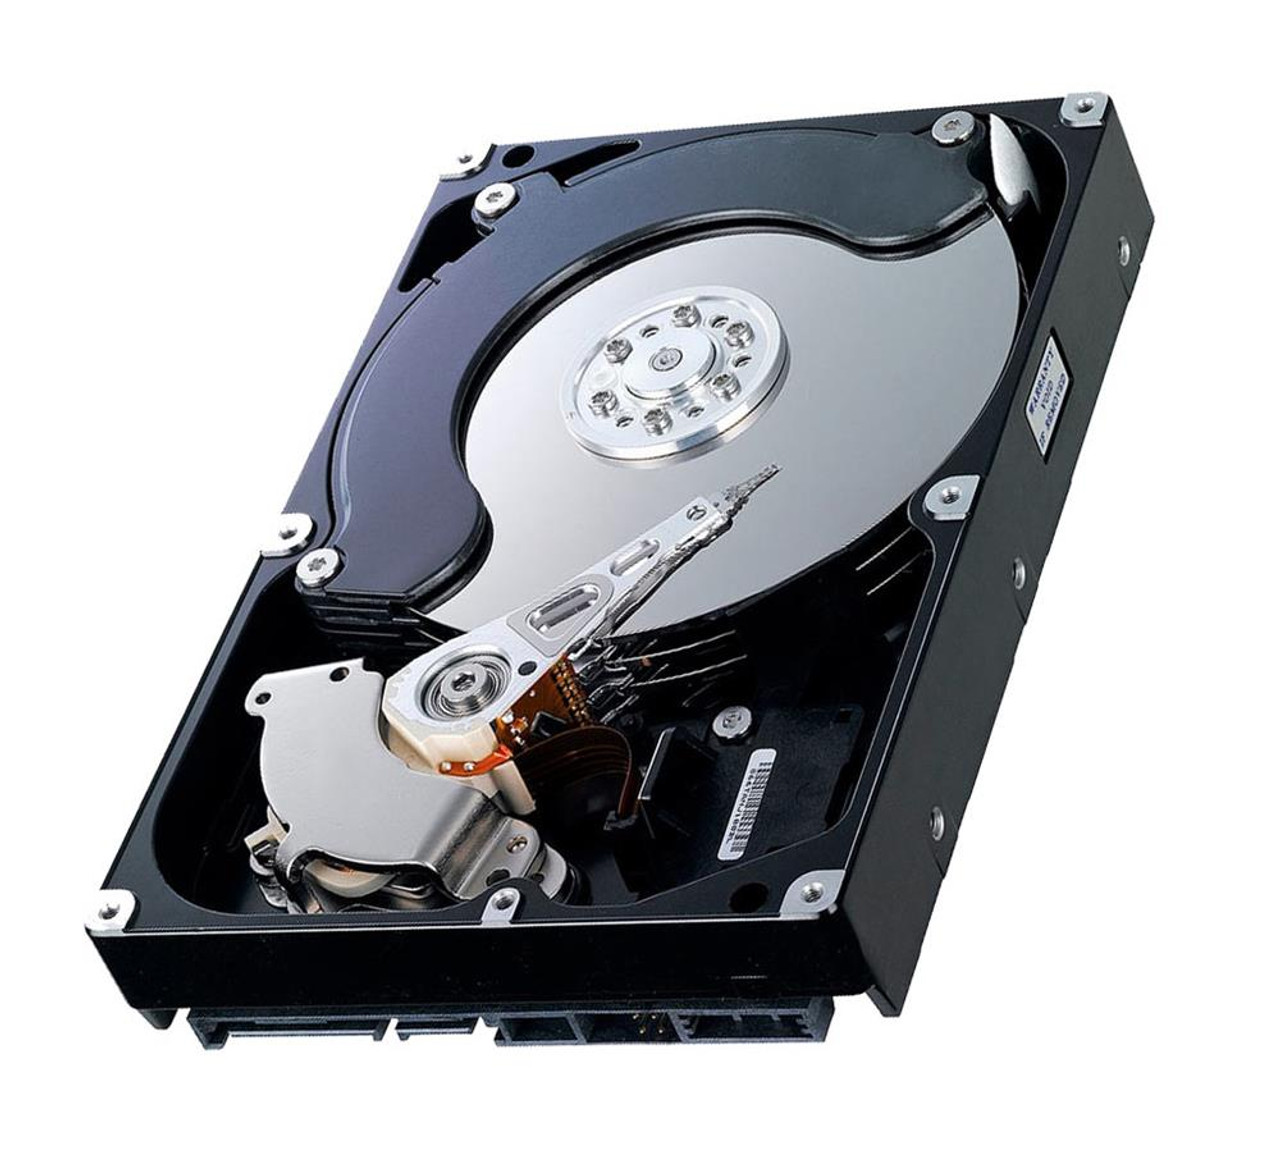 WD400LB-60DNA1 - Western Digital Caviar 40GB 7200RPM ATA-100 2MB Cache 3.5-inch Hard Disk Drive